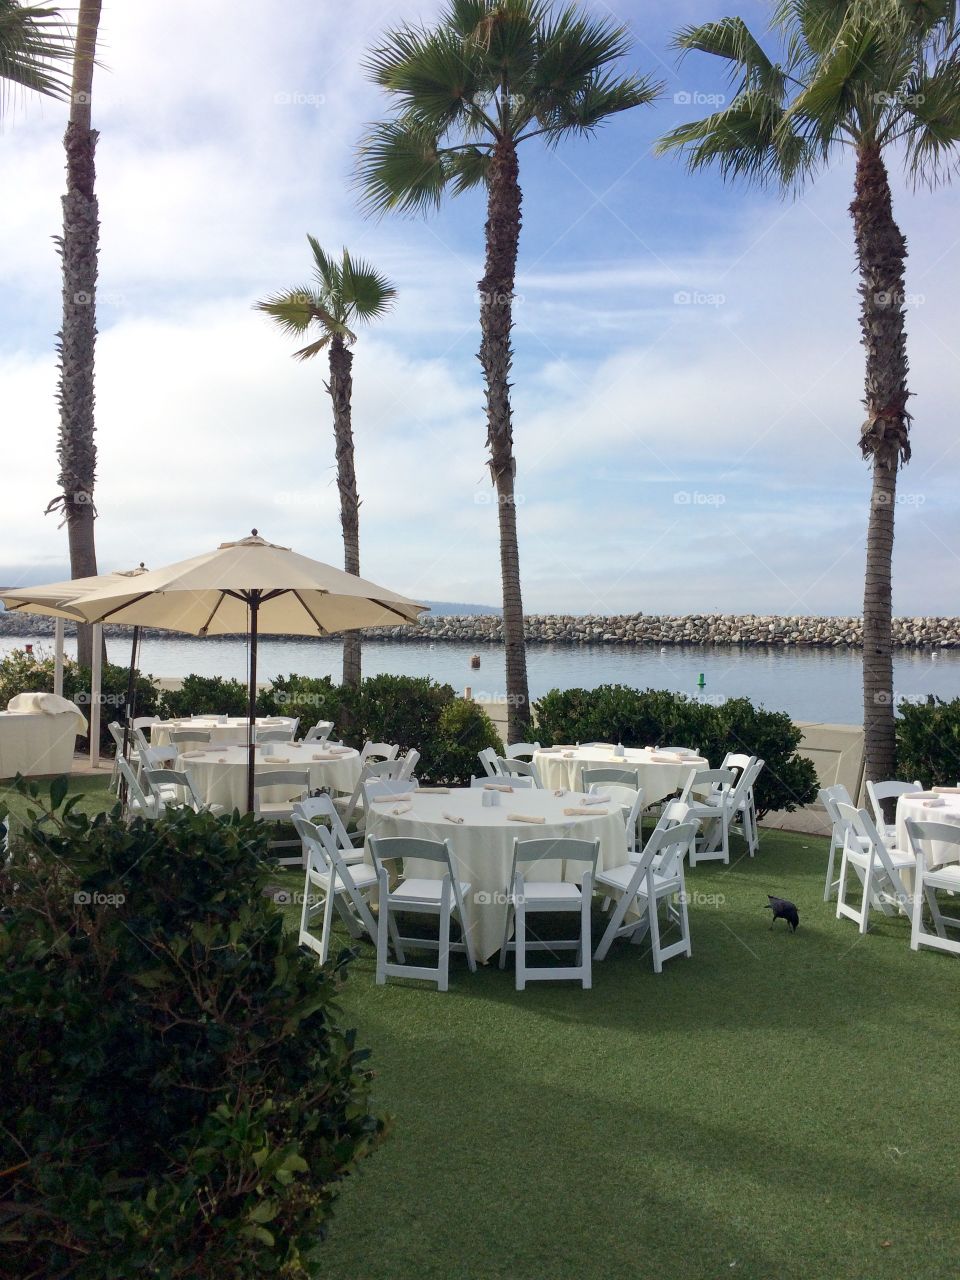 Outdoor Lunch Setup. Taken at the Portofino Hotel in Redondo Beach, California, October 2016.